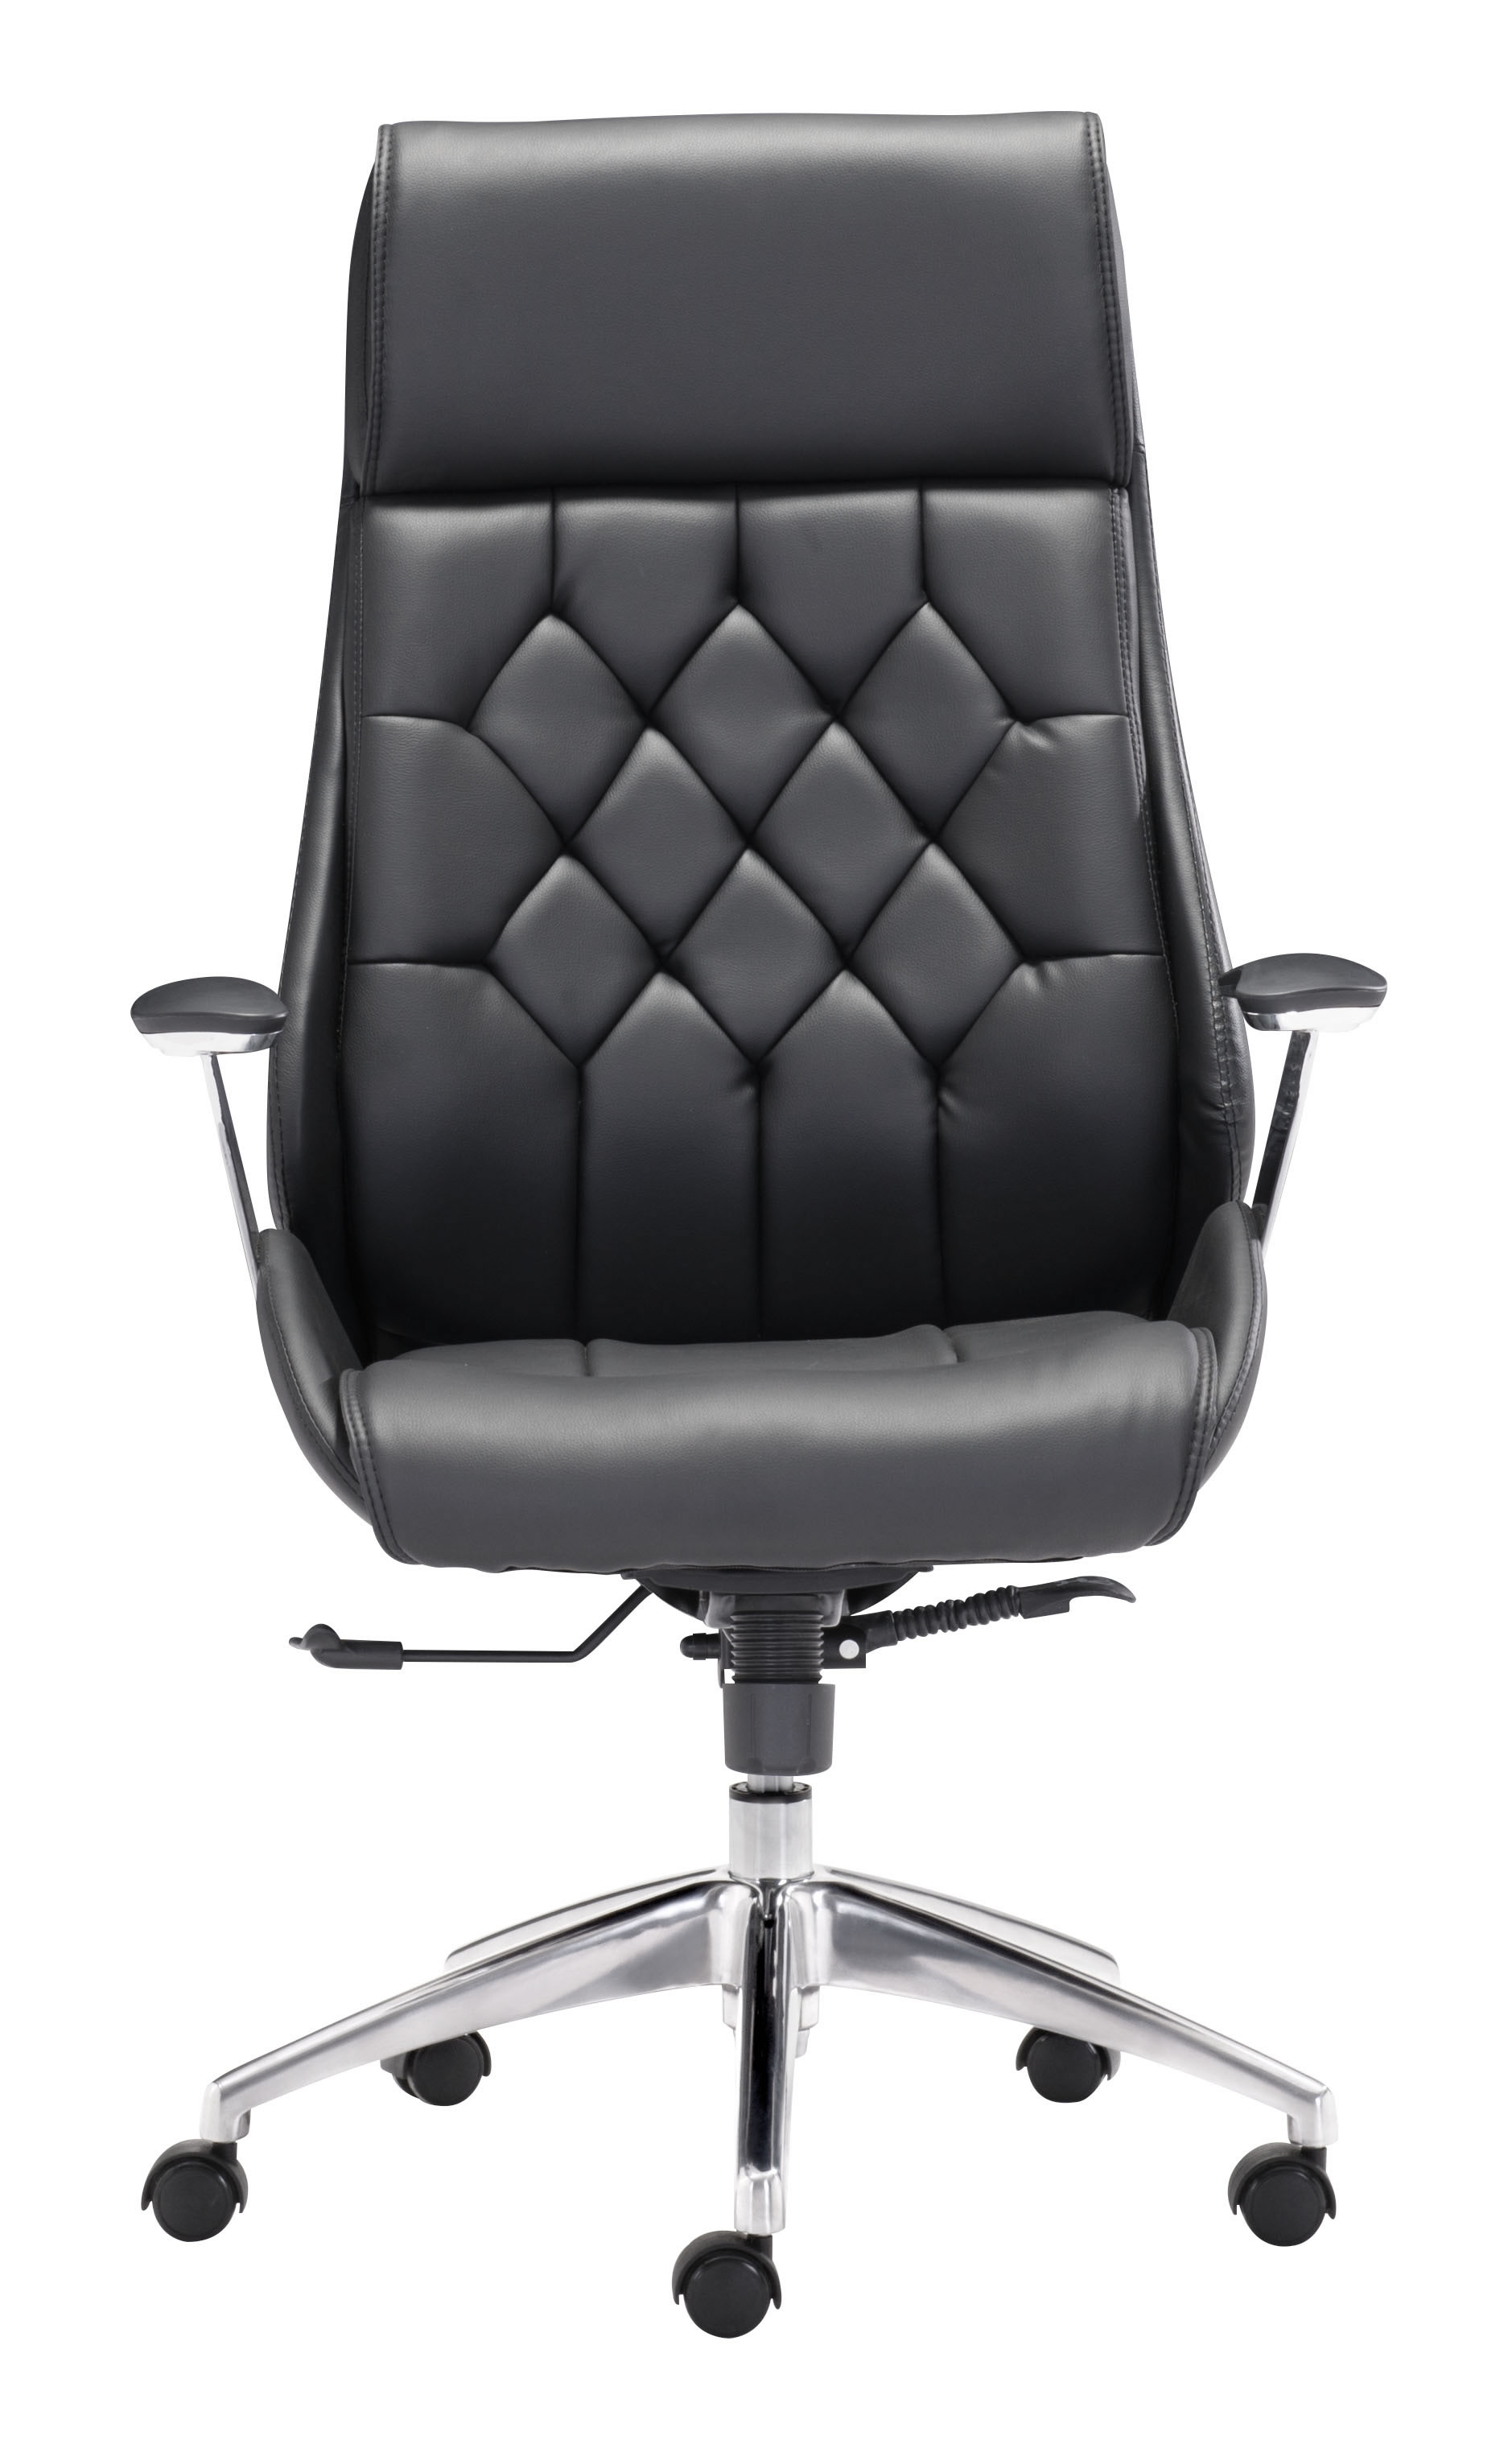 28.7" x 29" x 46.6" Black, Leatherette, Chromed Steel, Office Chair